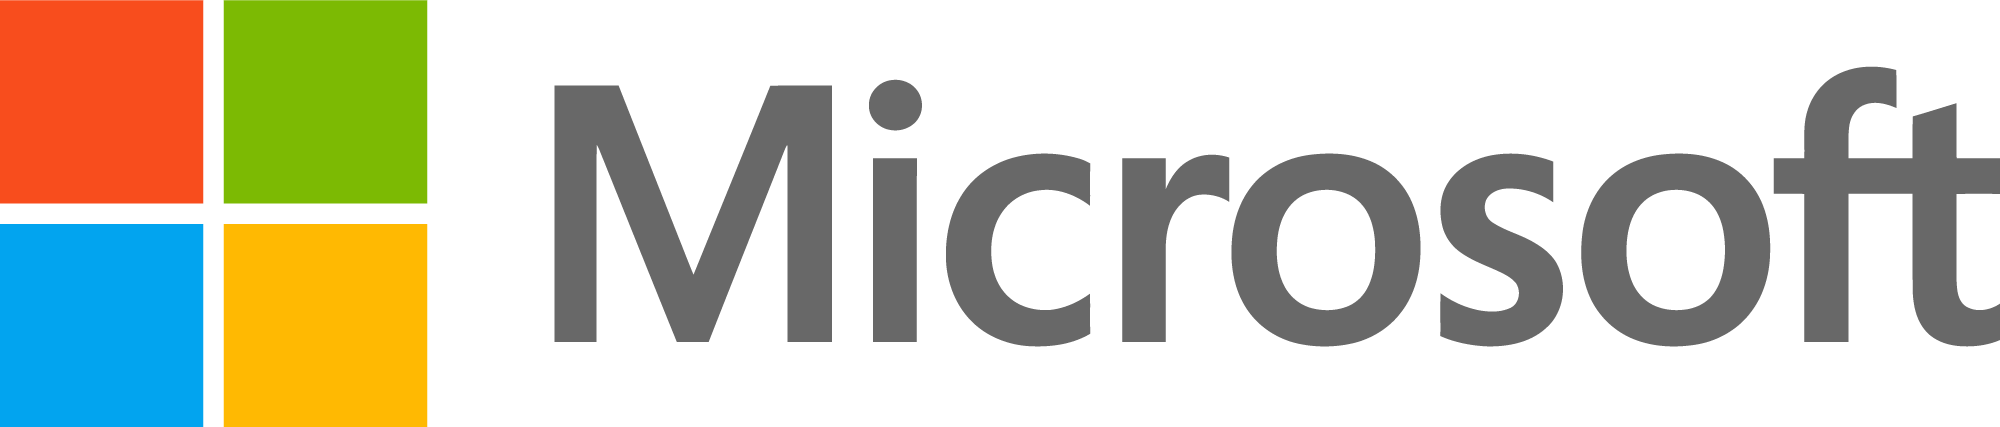 Microsoft Logo PNG title=